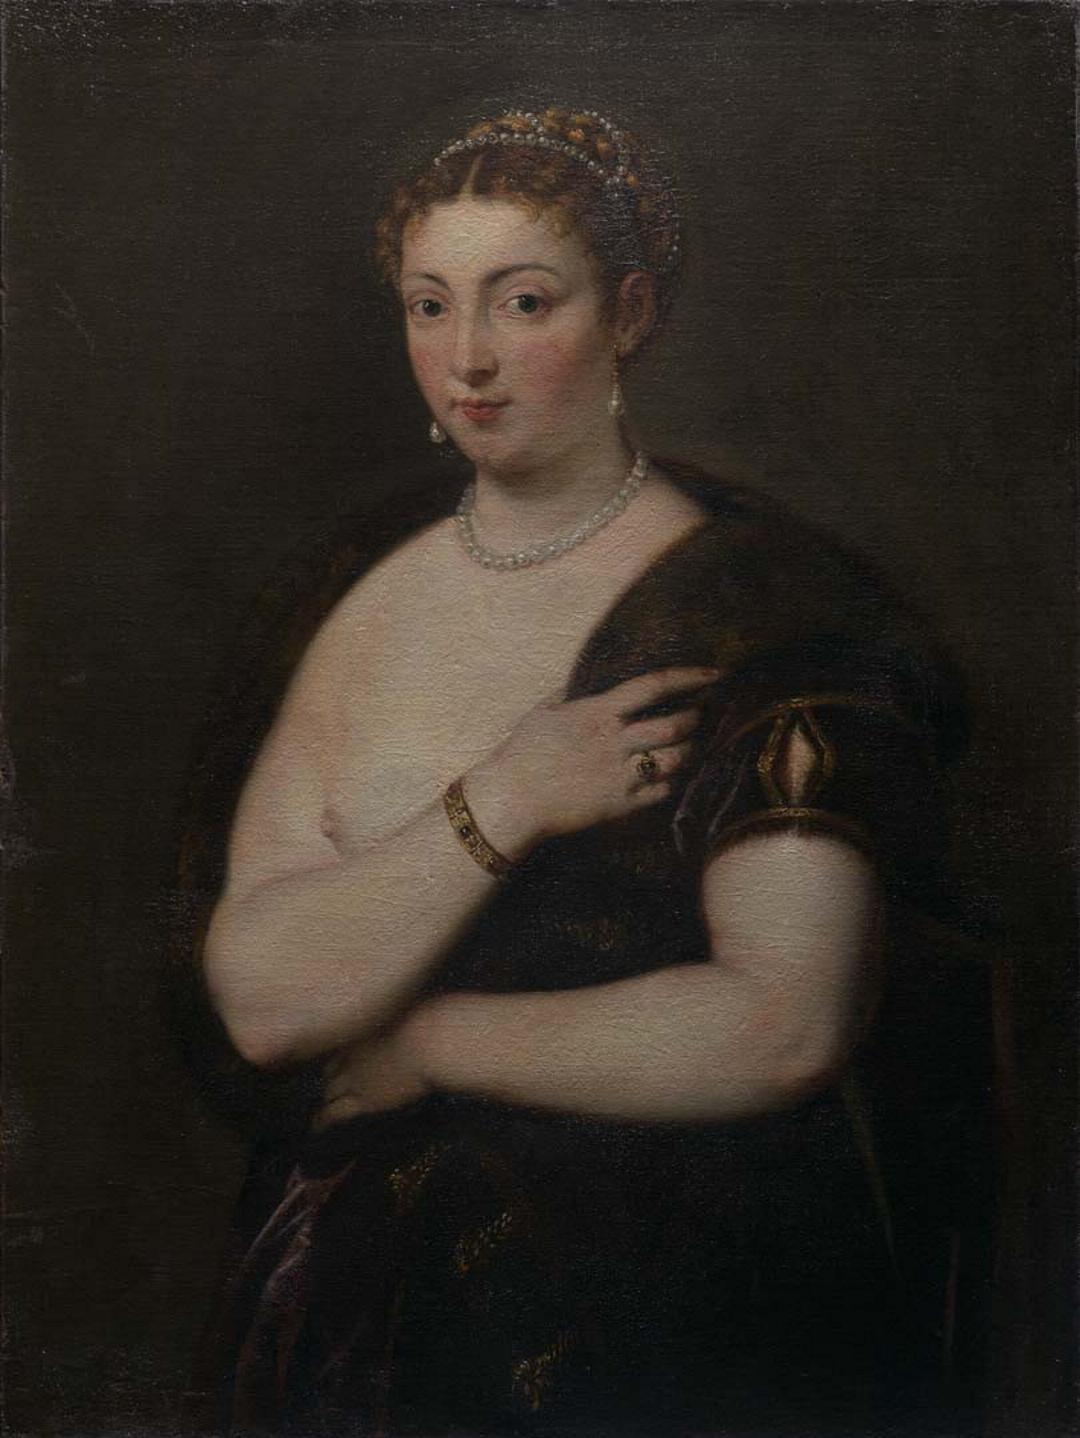 Slider: Raking light, Young woman in a fur wrap (after Titian) c.1629-30 RUBENS, Peter Paul